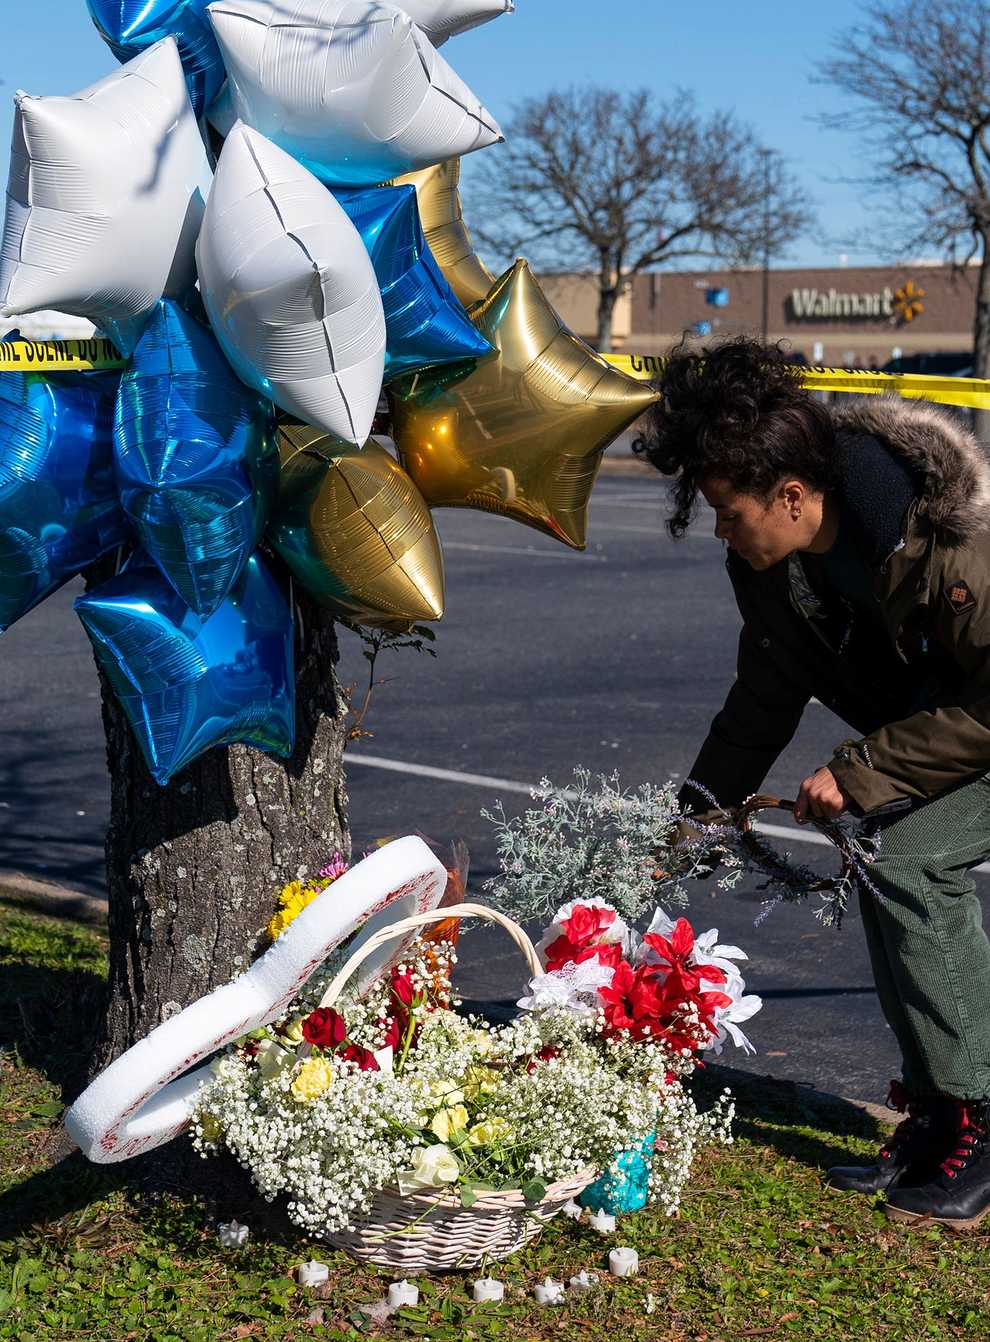 A passer-by places flowers near the Walmart store where six people were shot dead (AP Photo/Alex Brandon)